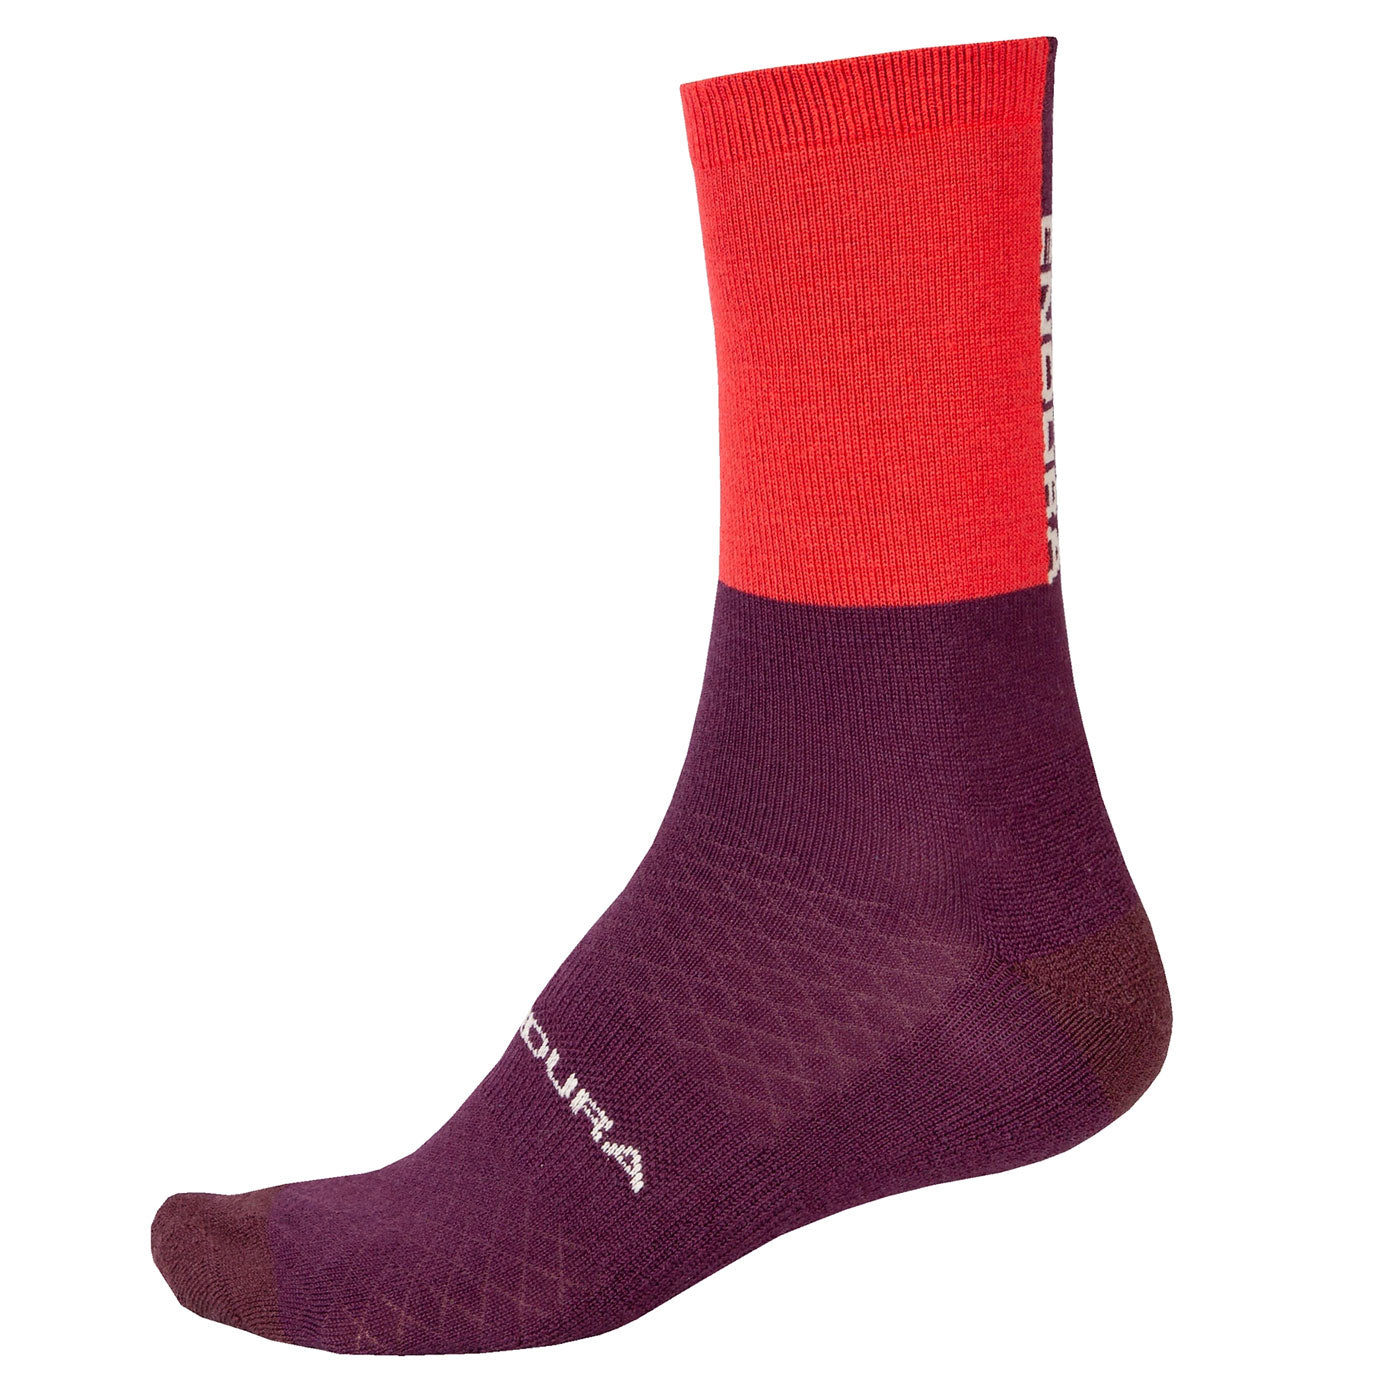 Endura Baabaa Merino Winter socks - Red violet | All4cycling